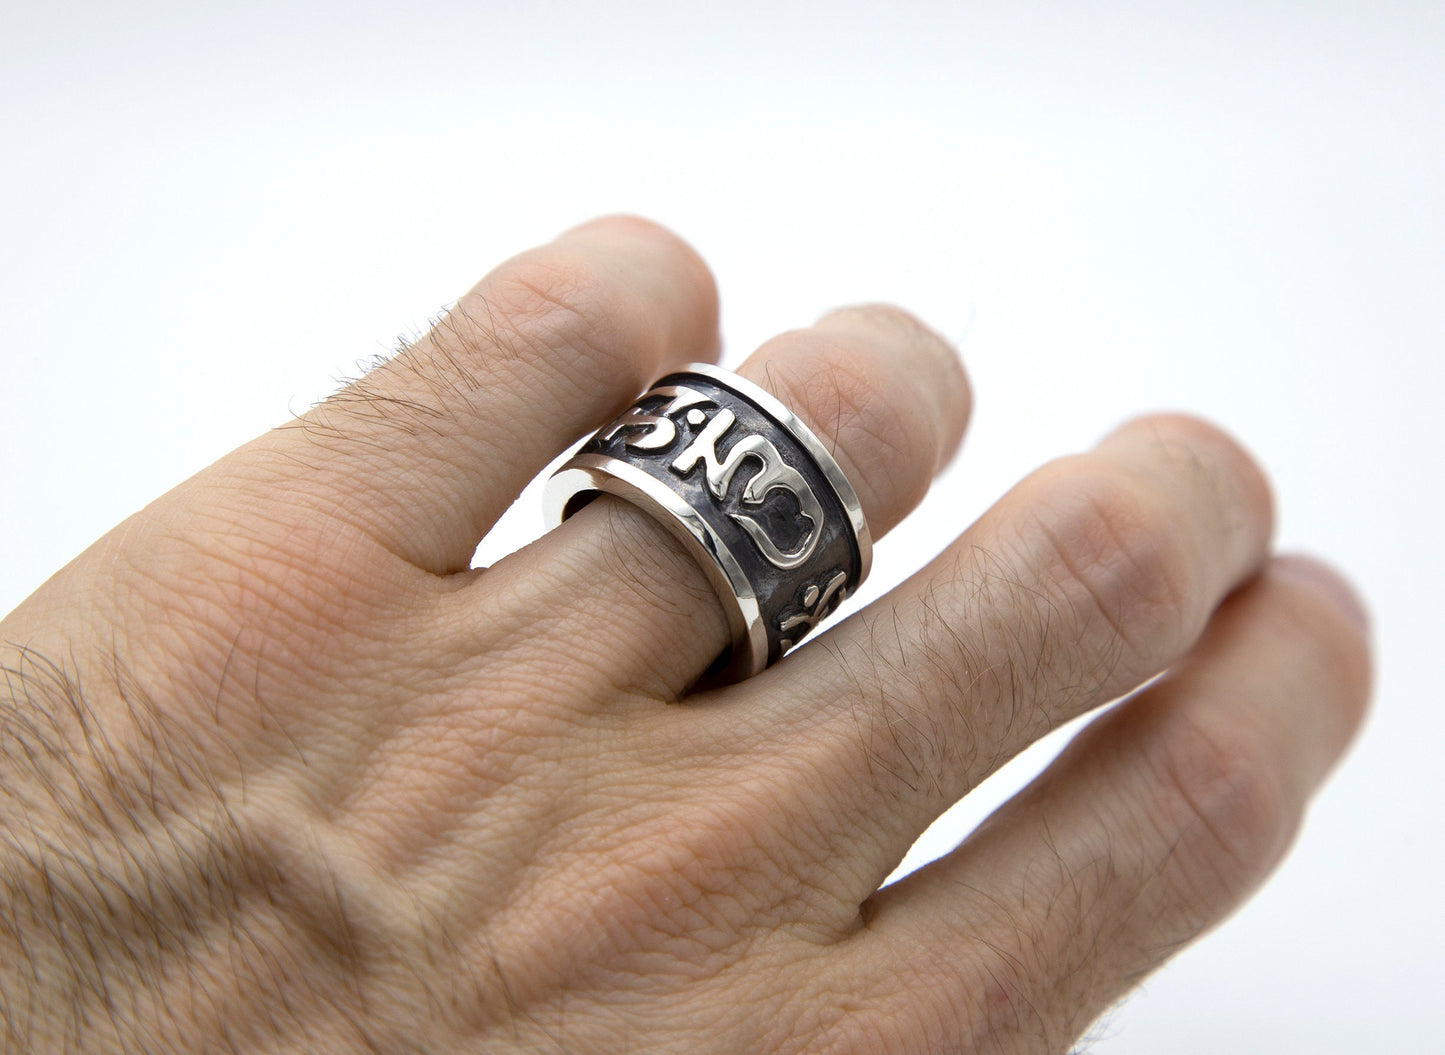 Tibetan Mantra Sterling Silver Ring - Size 8